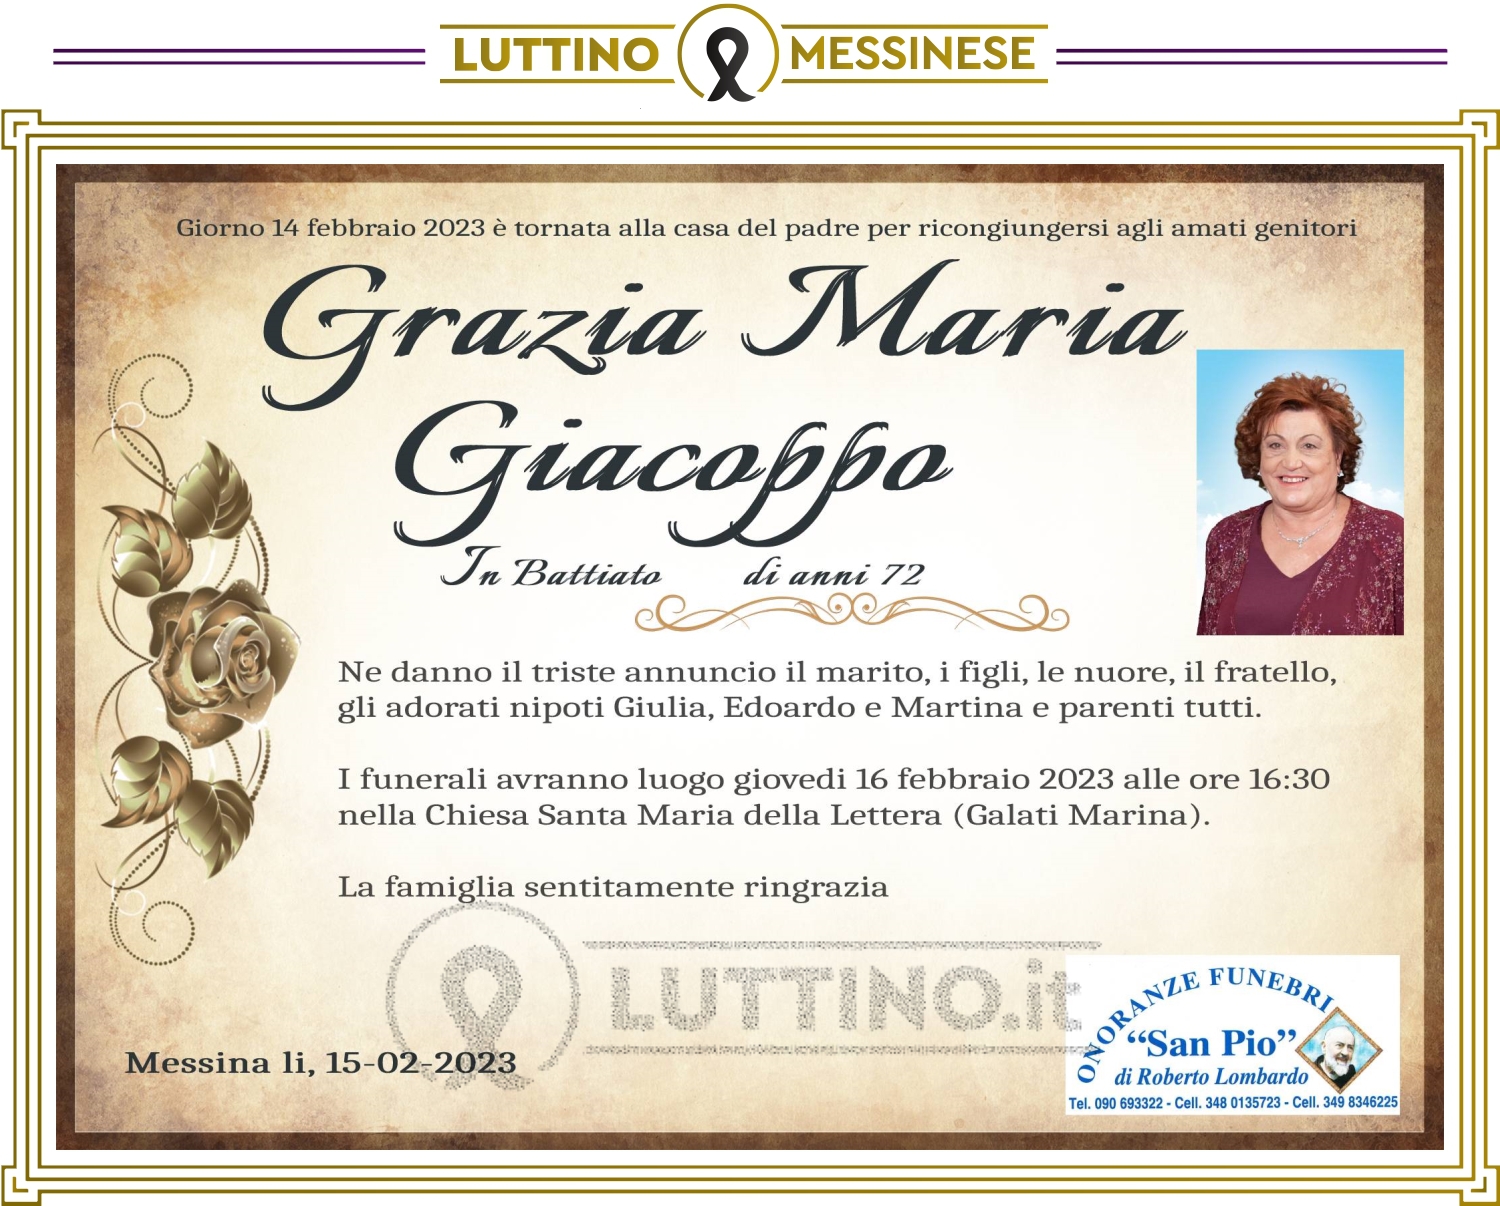 Grazia Maria Giacoppo